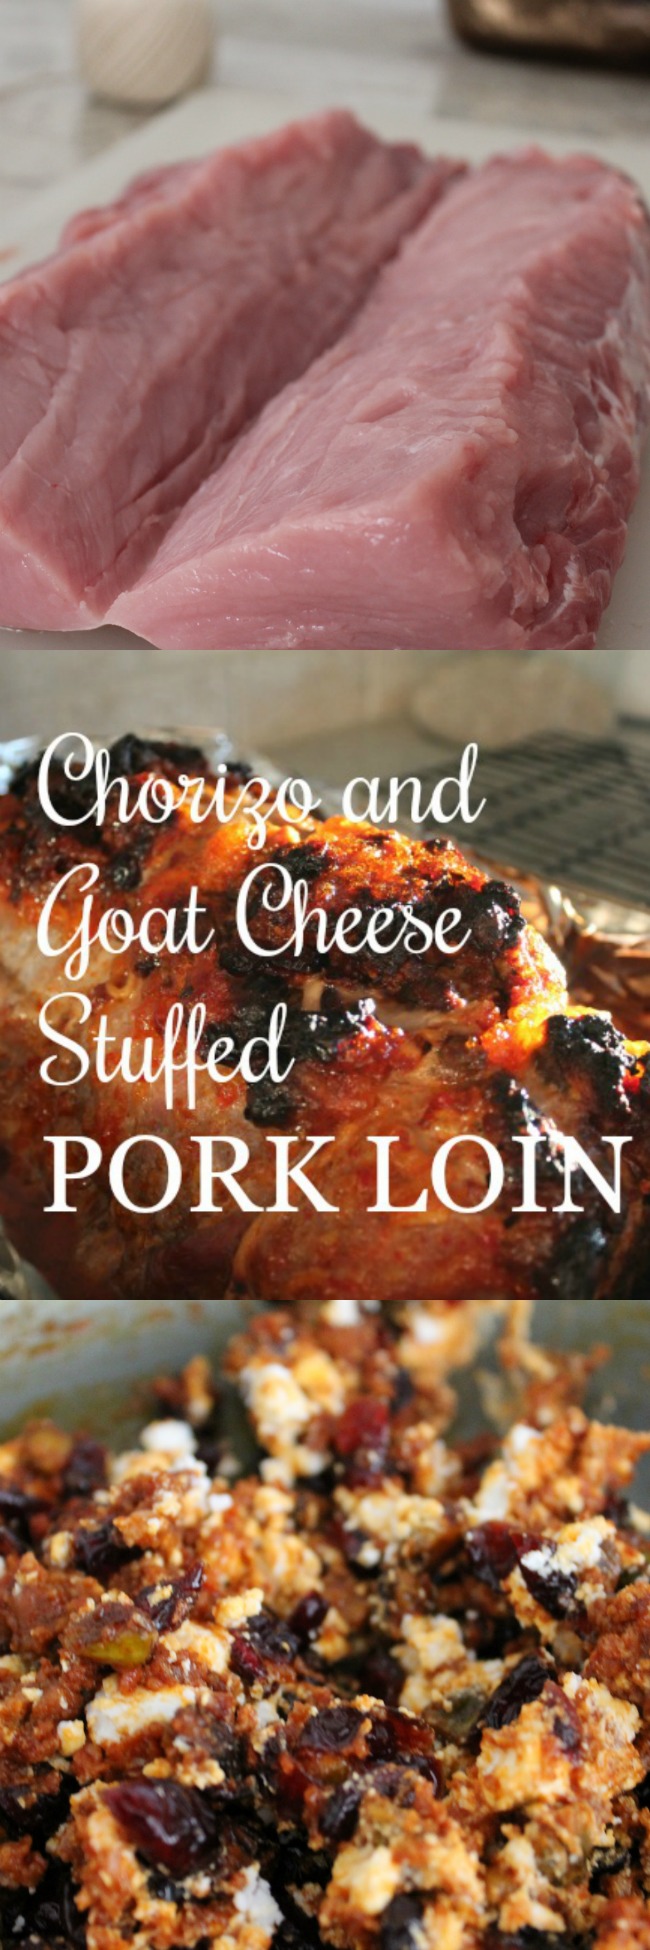 Chorizo and Goat Cheese Stuffed Pork Loin via Shana Chaplin for ARWB Foodie Friday